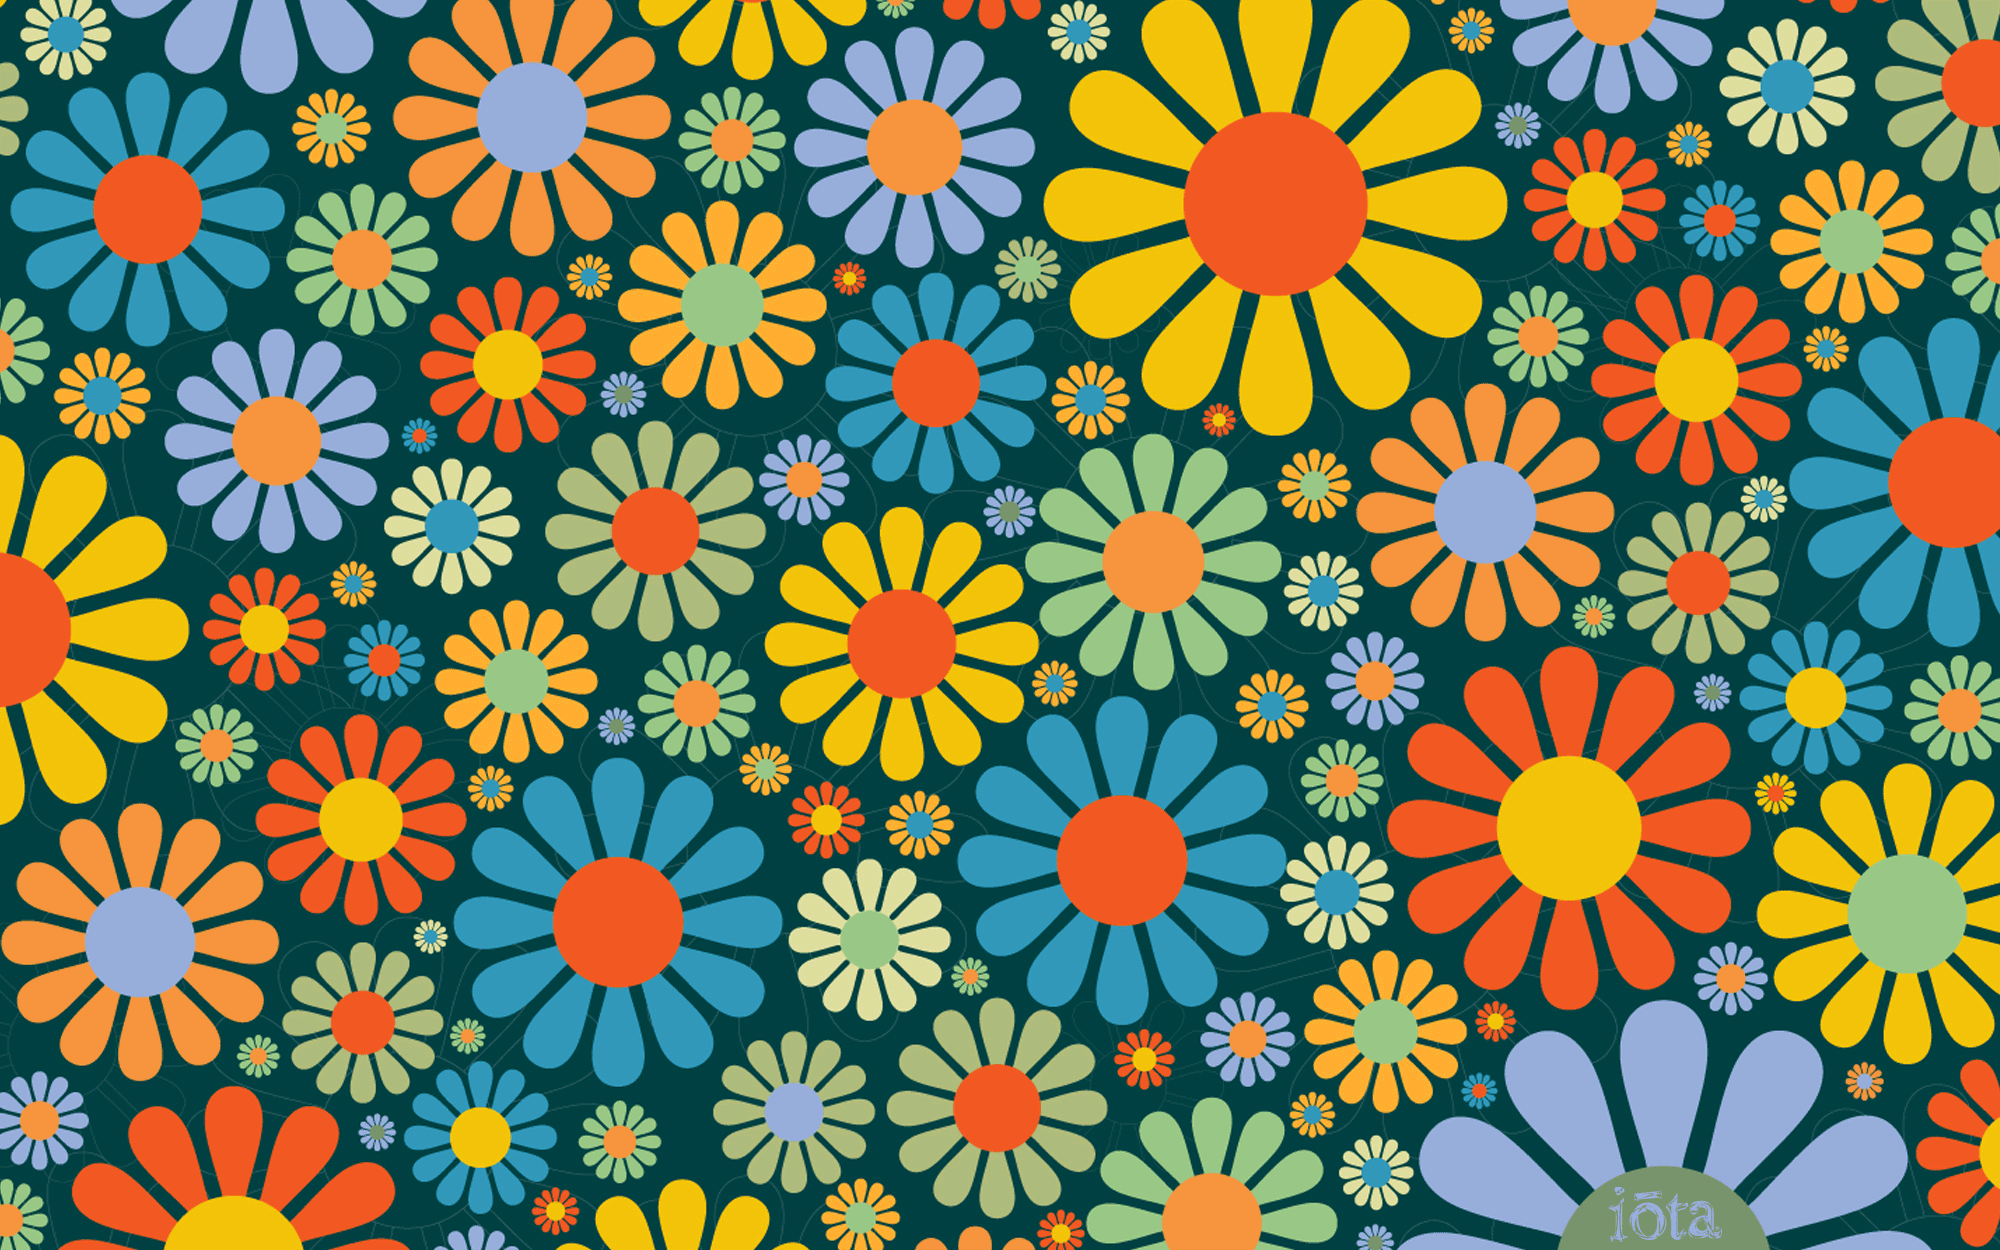 flowerpower. Flower power wallpaper, Flower wallpaper, 70s patterns